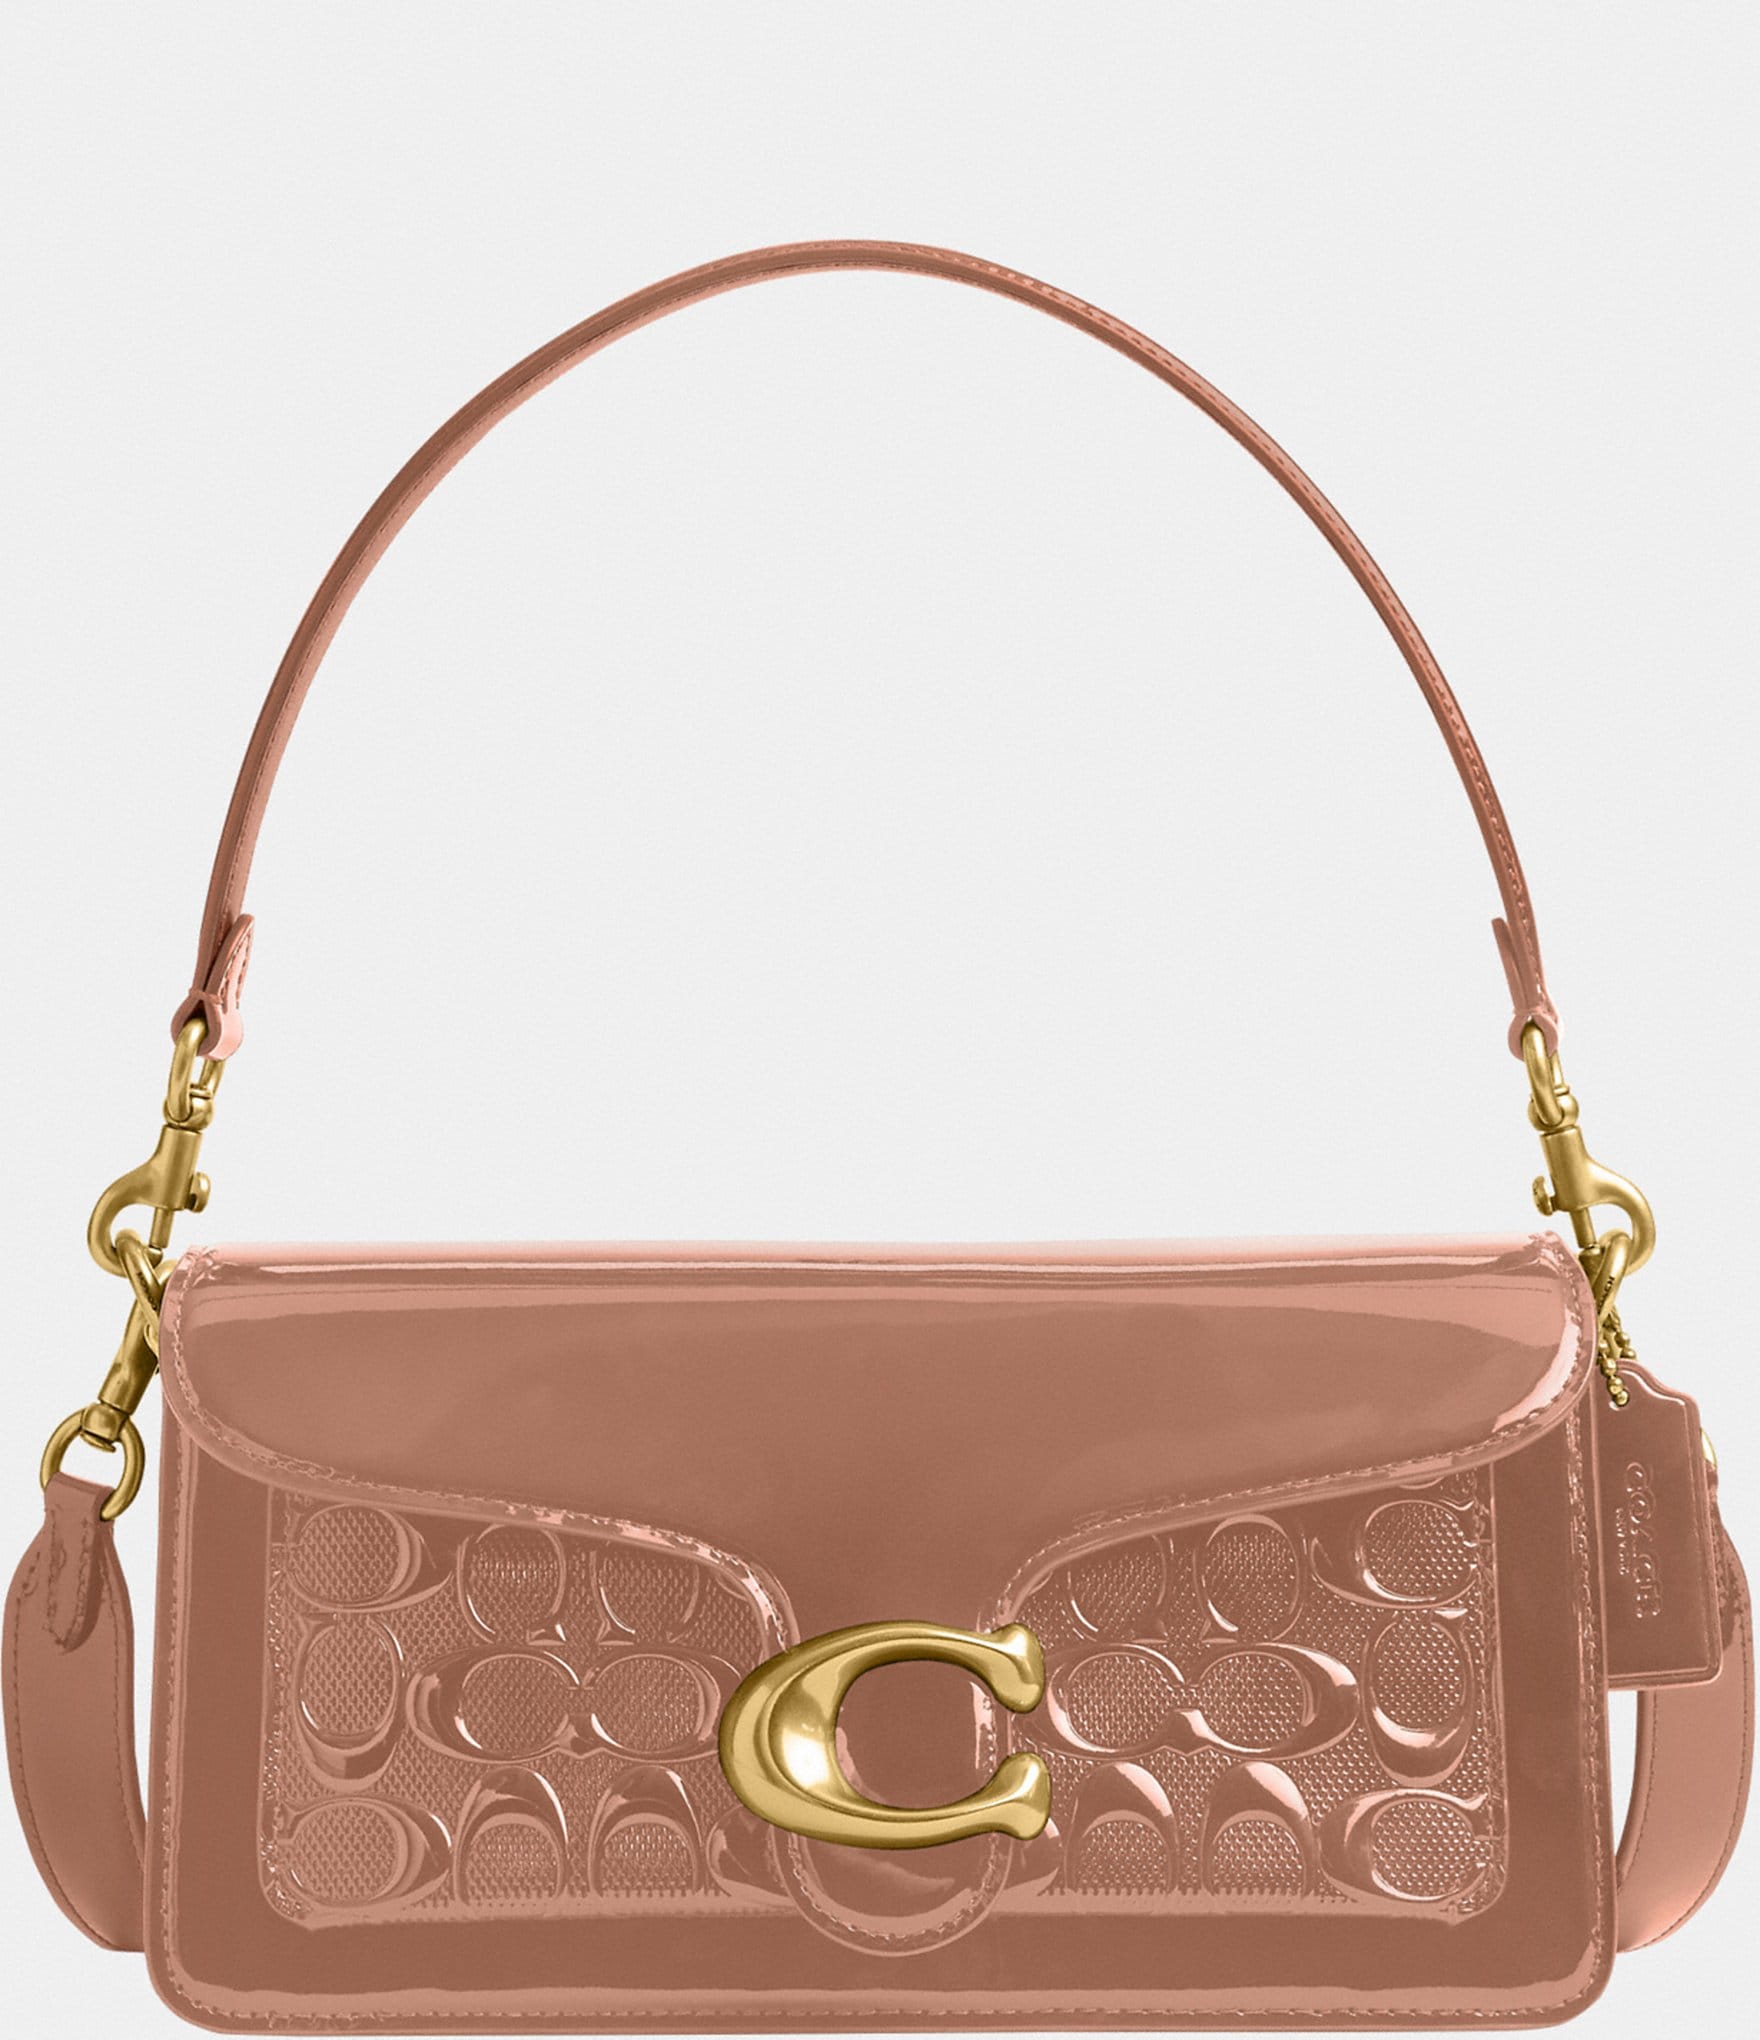 COACH Handbags | Leather belt bag, Bags, Leather tote bag